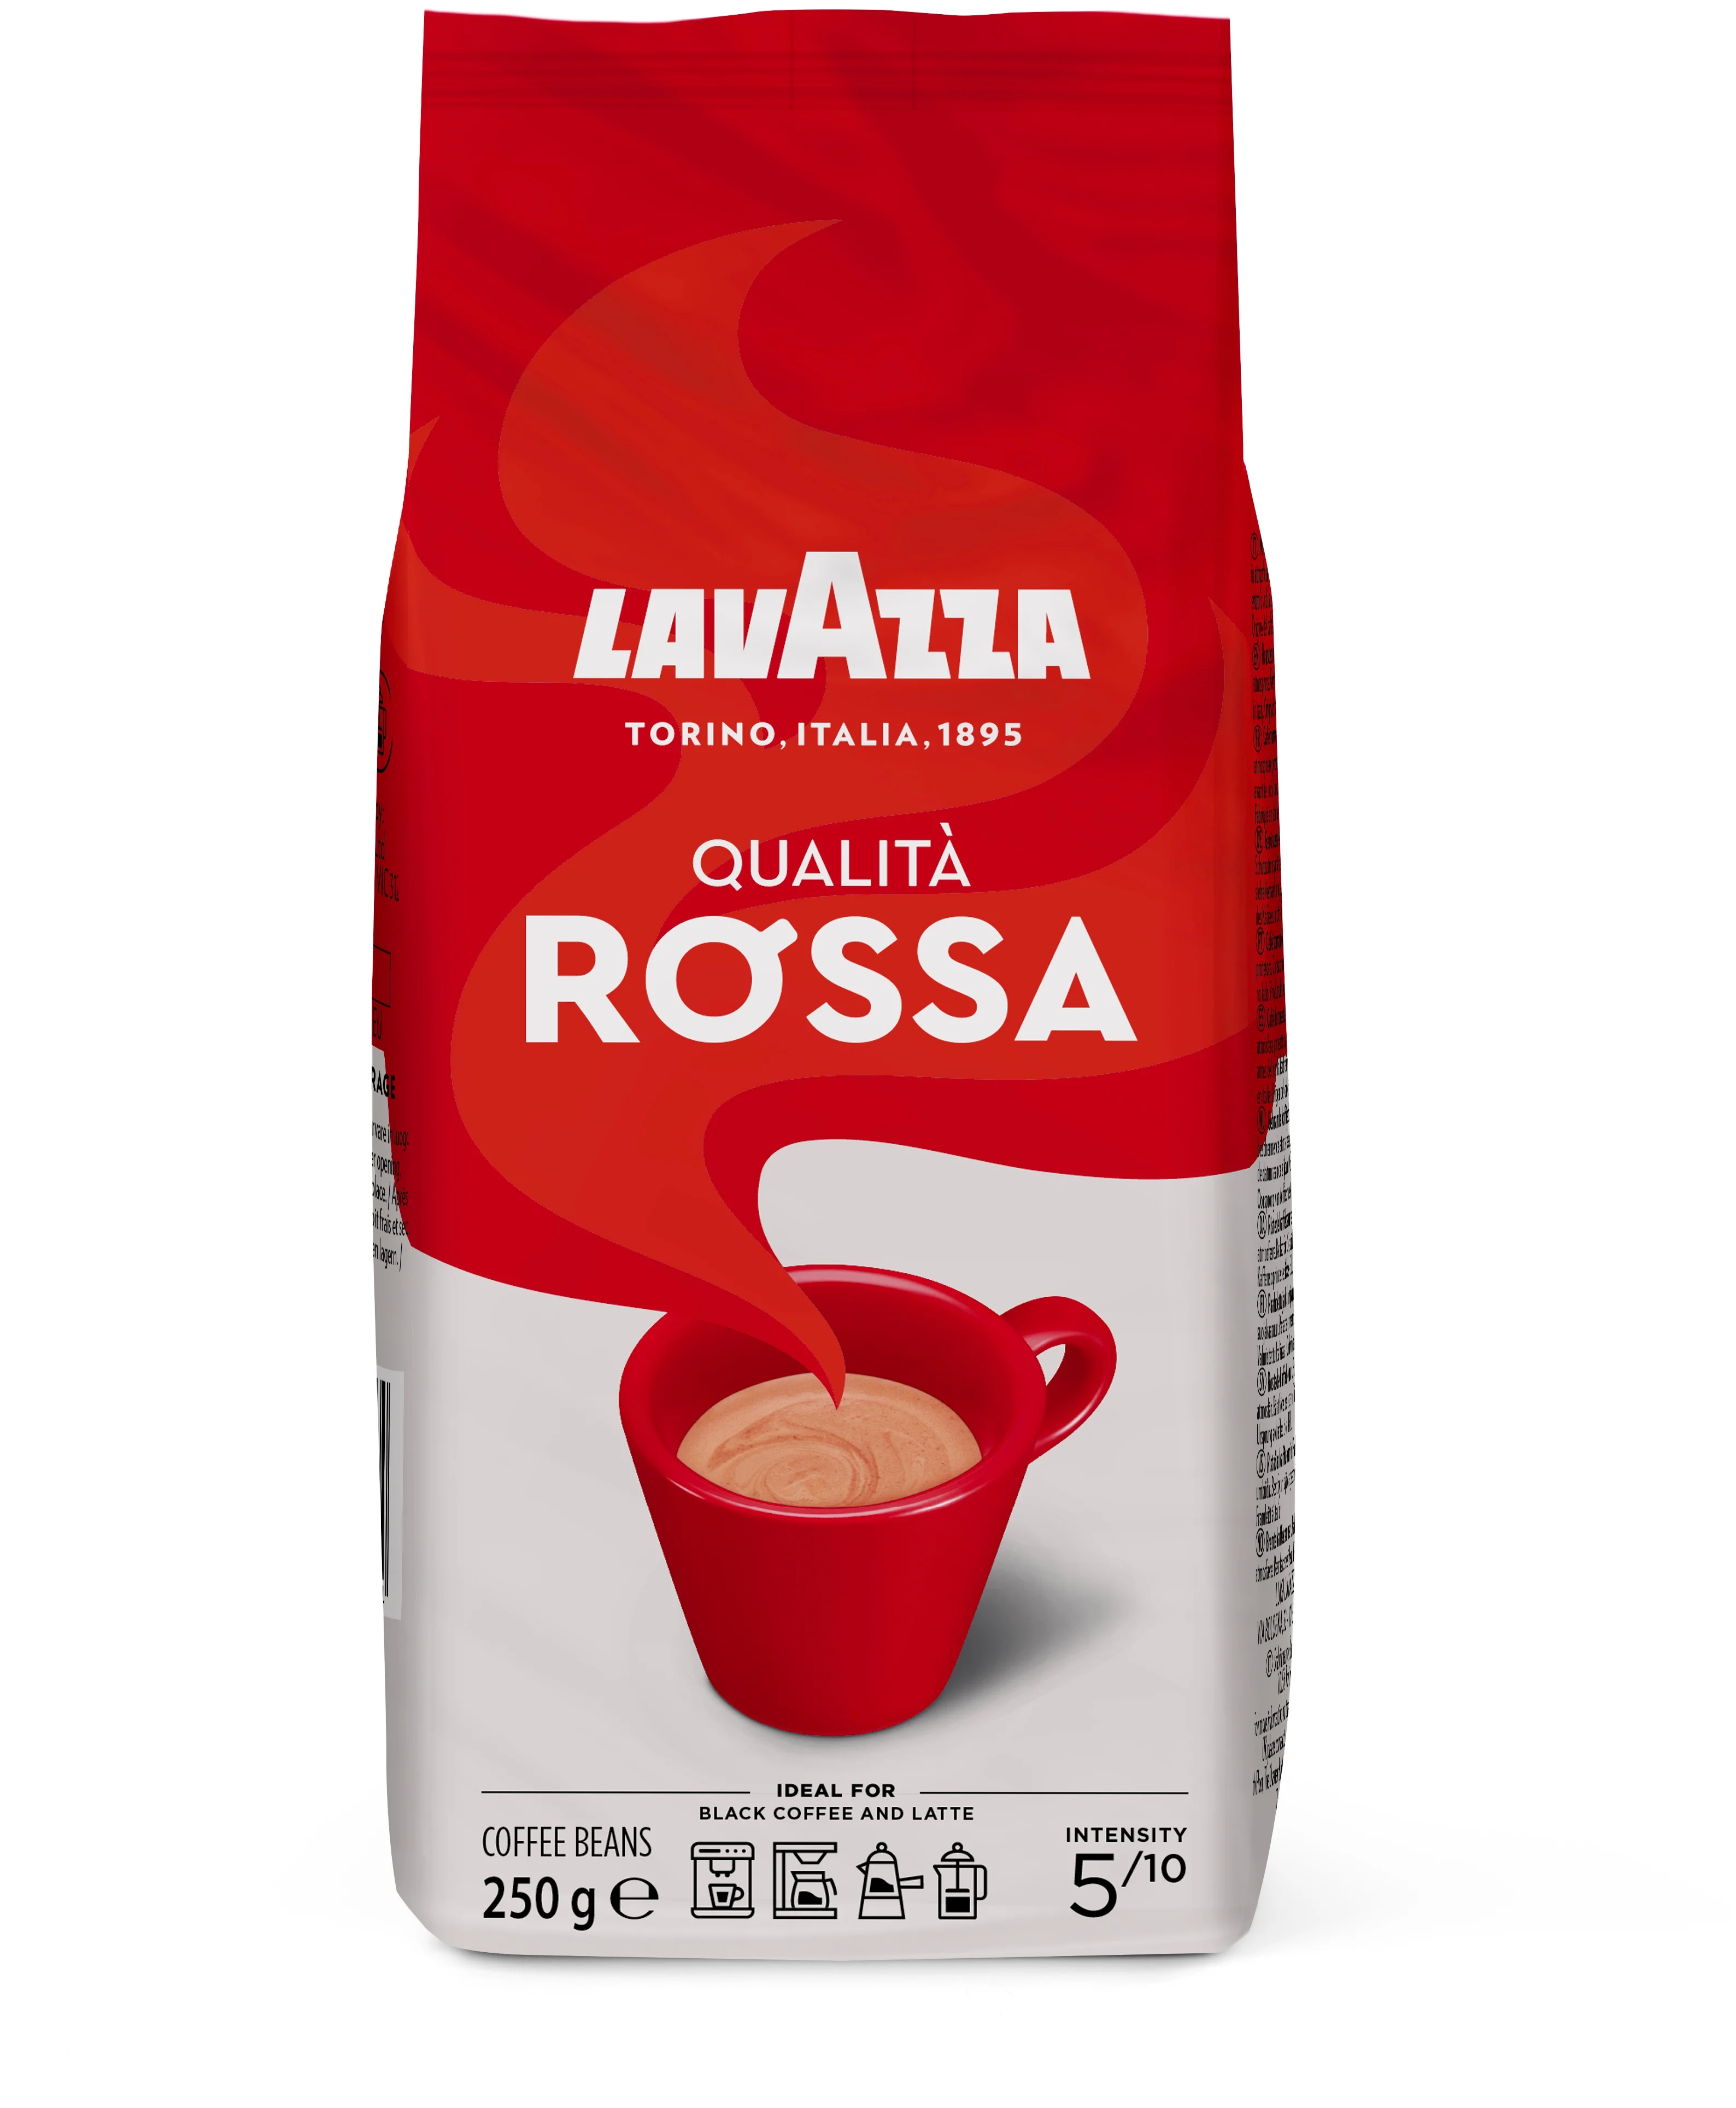 Lavazza Qualità Rossa - вид зерен: смесь арабики и робусты